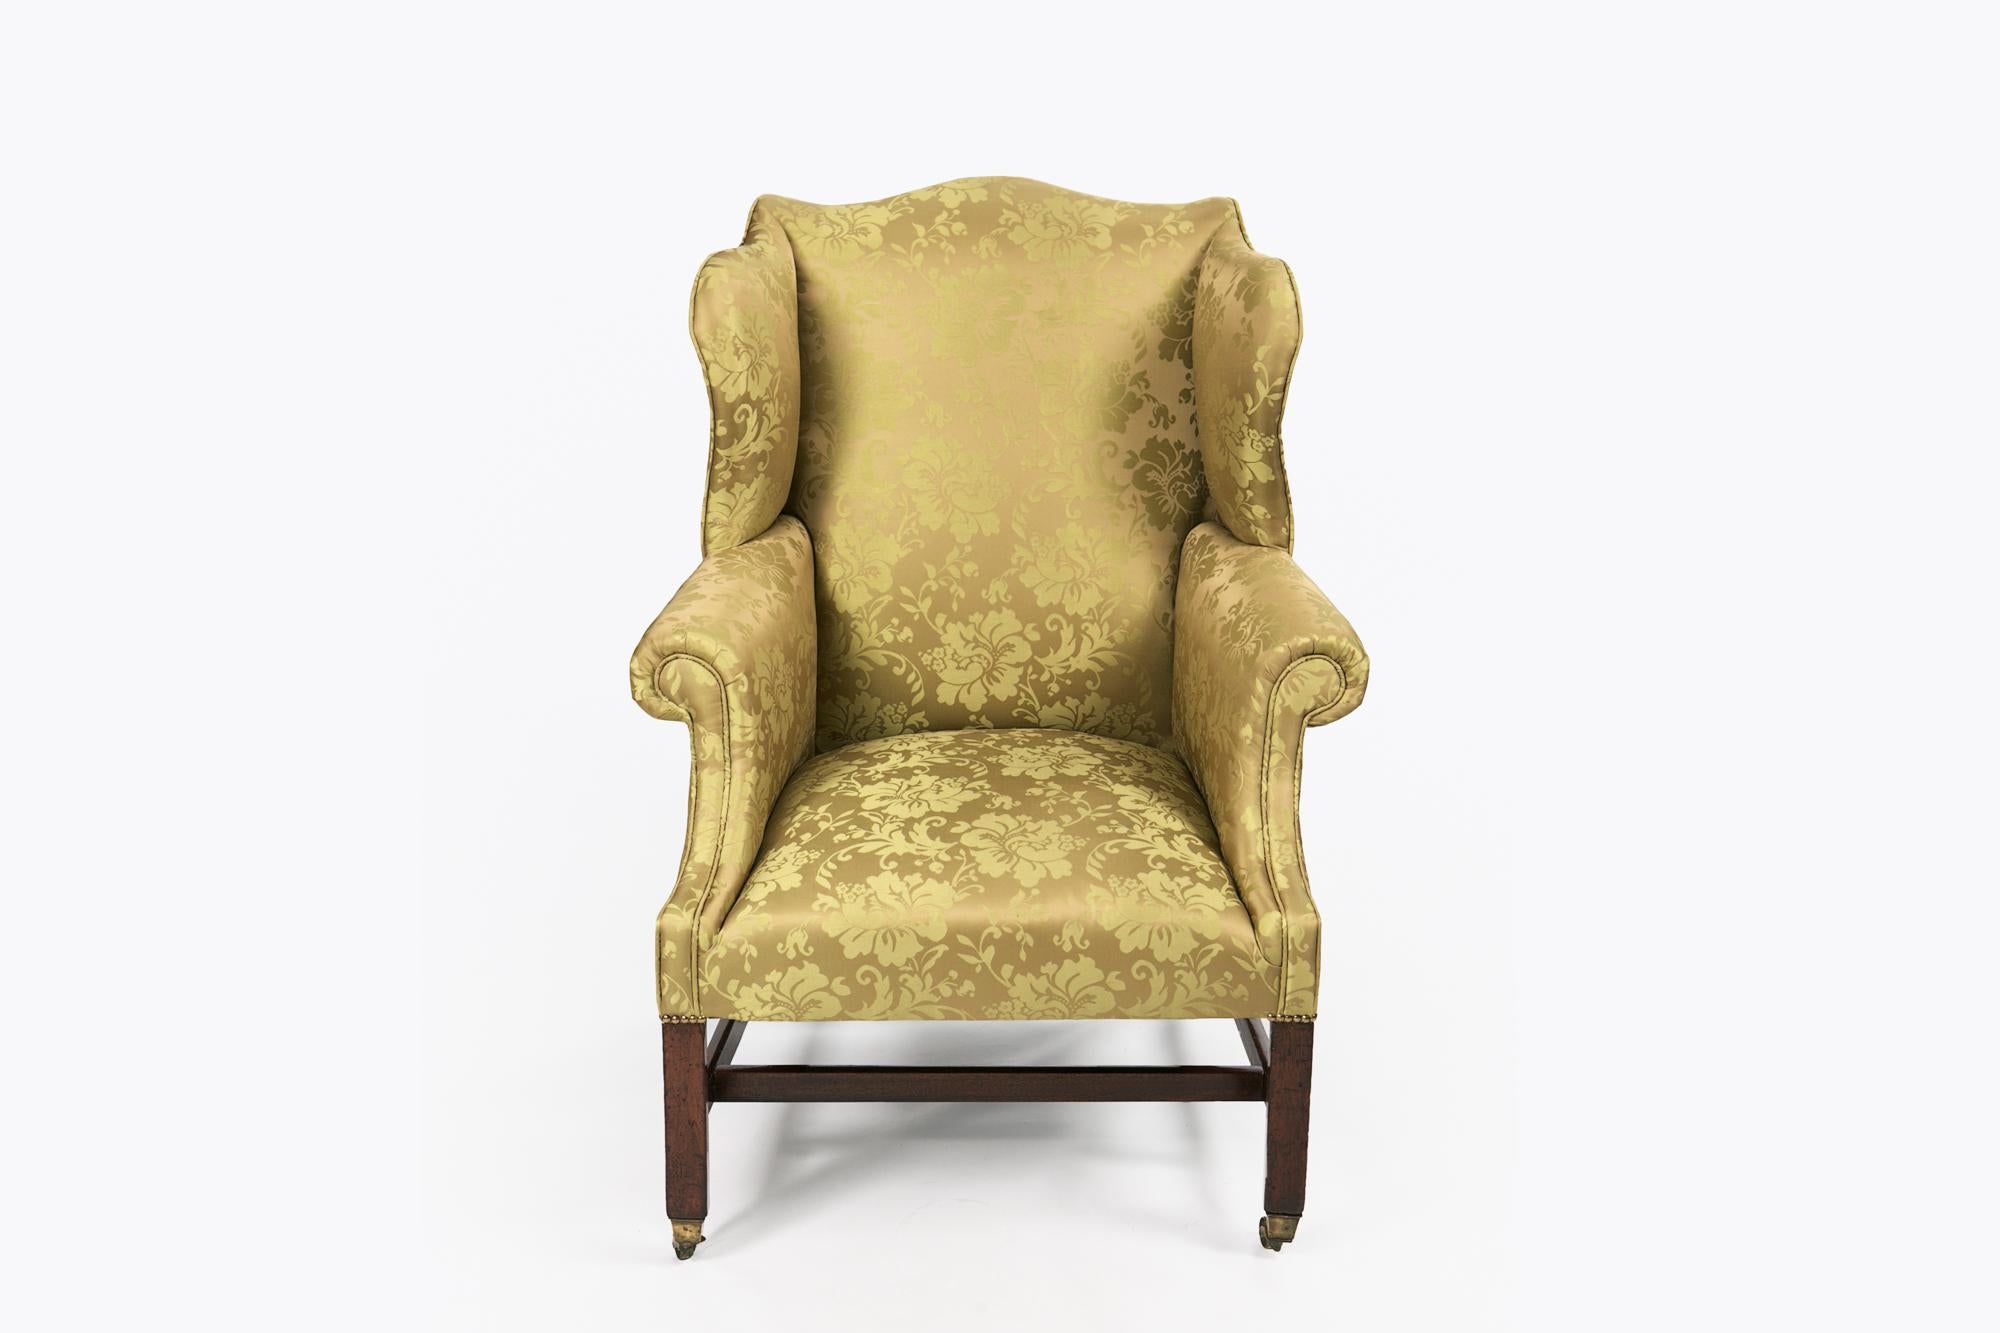 Irish Early 19th Century George III Wing Chair For Sale